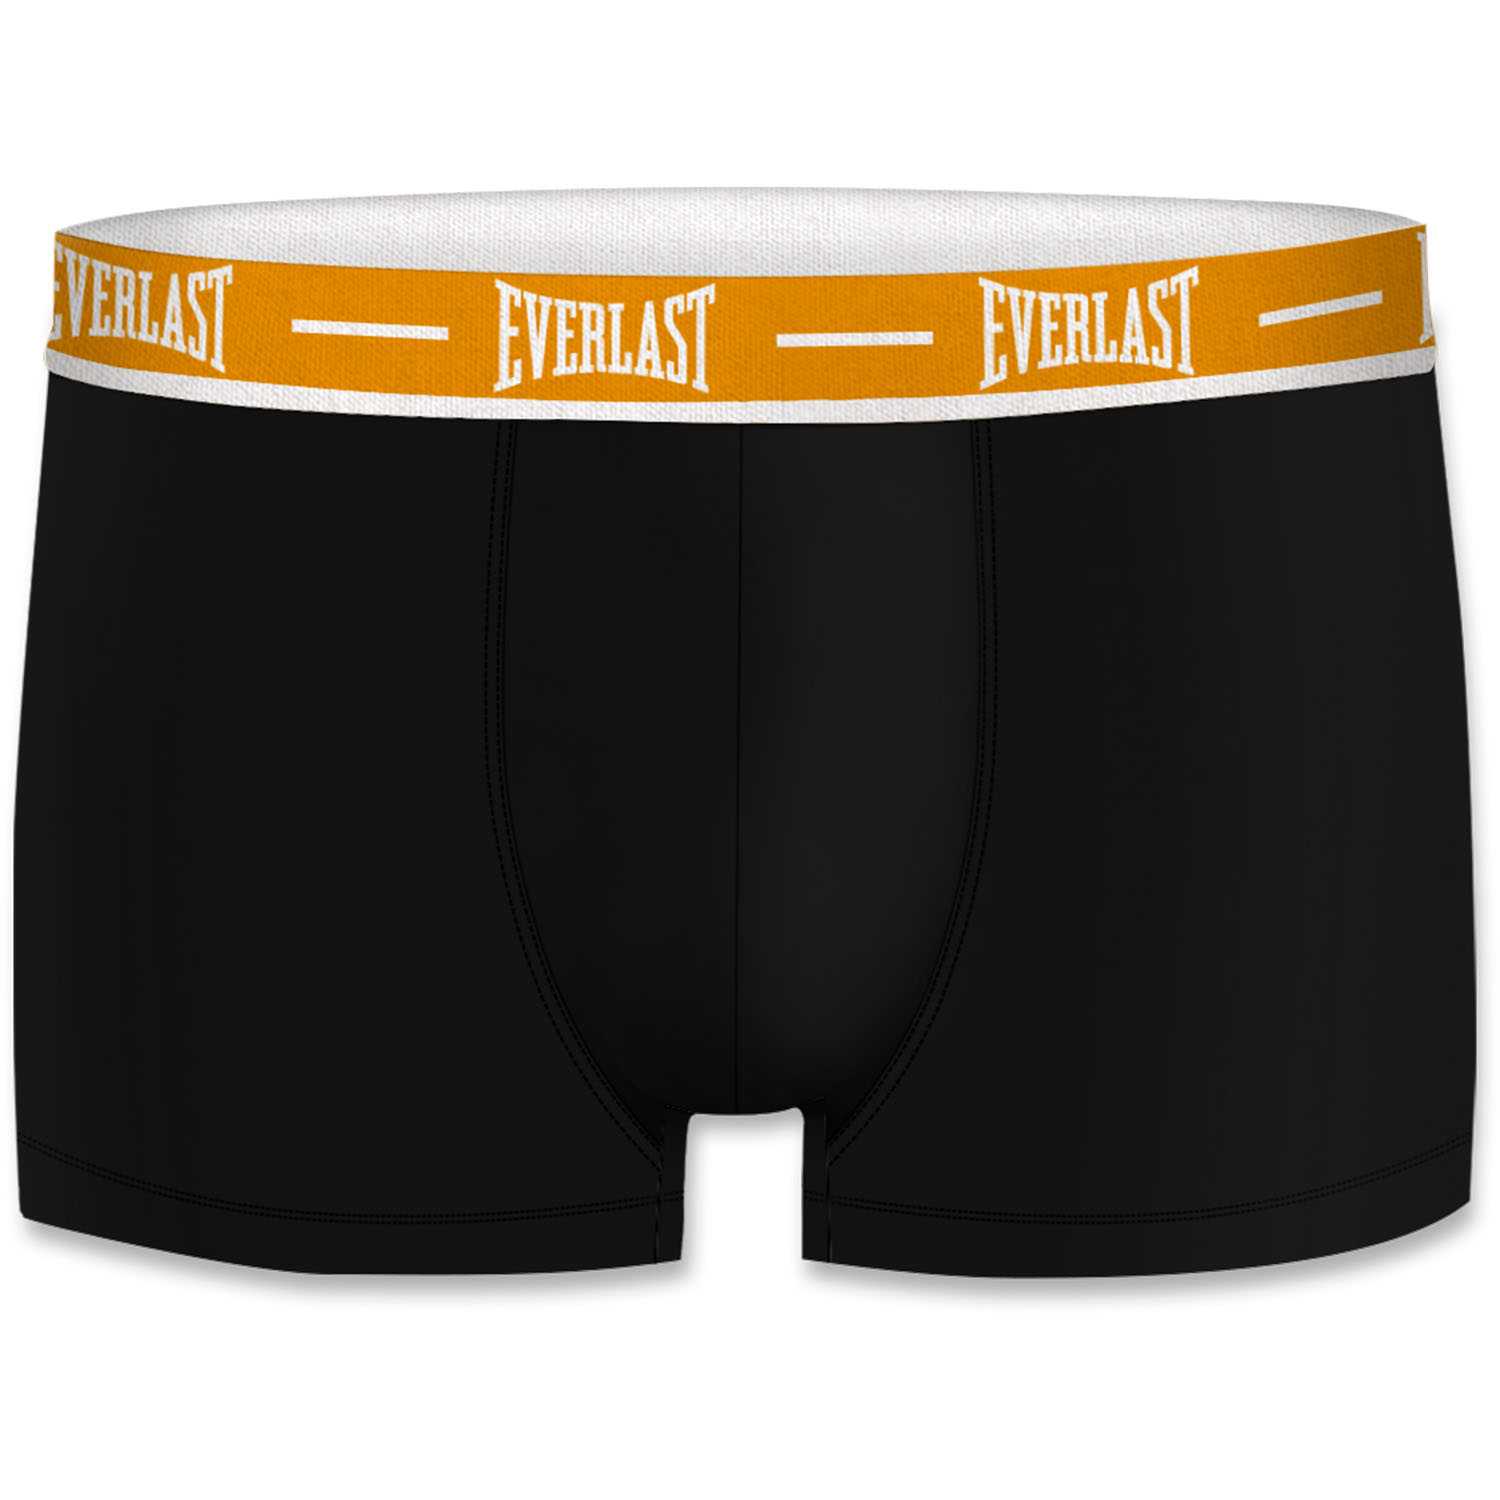 Everlast Boxershorts, AS2, black-orange